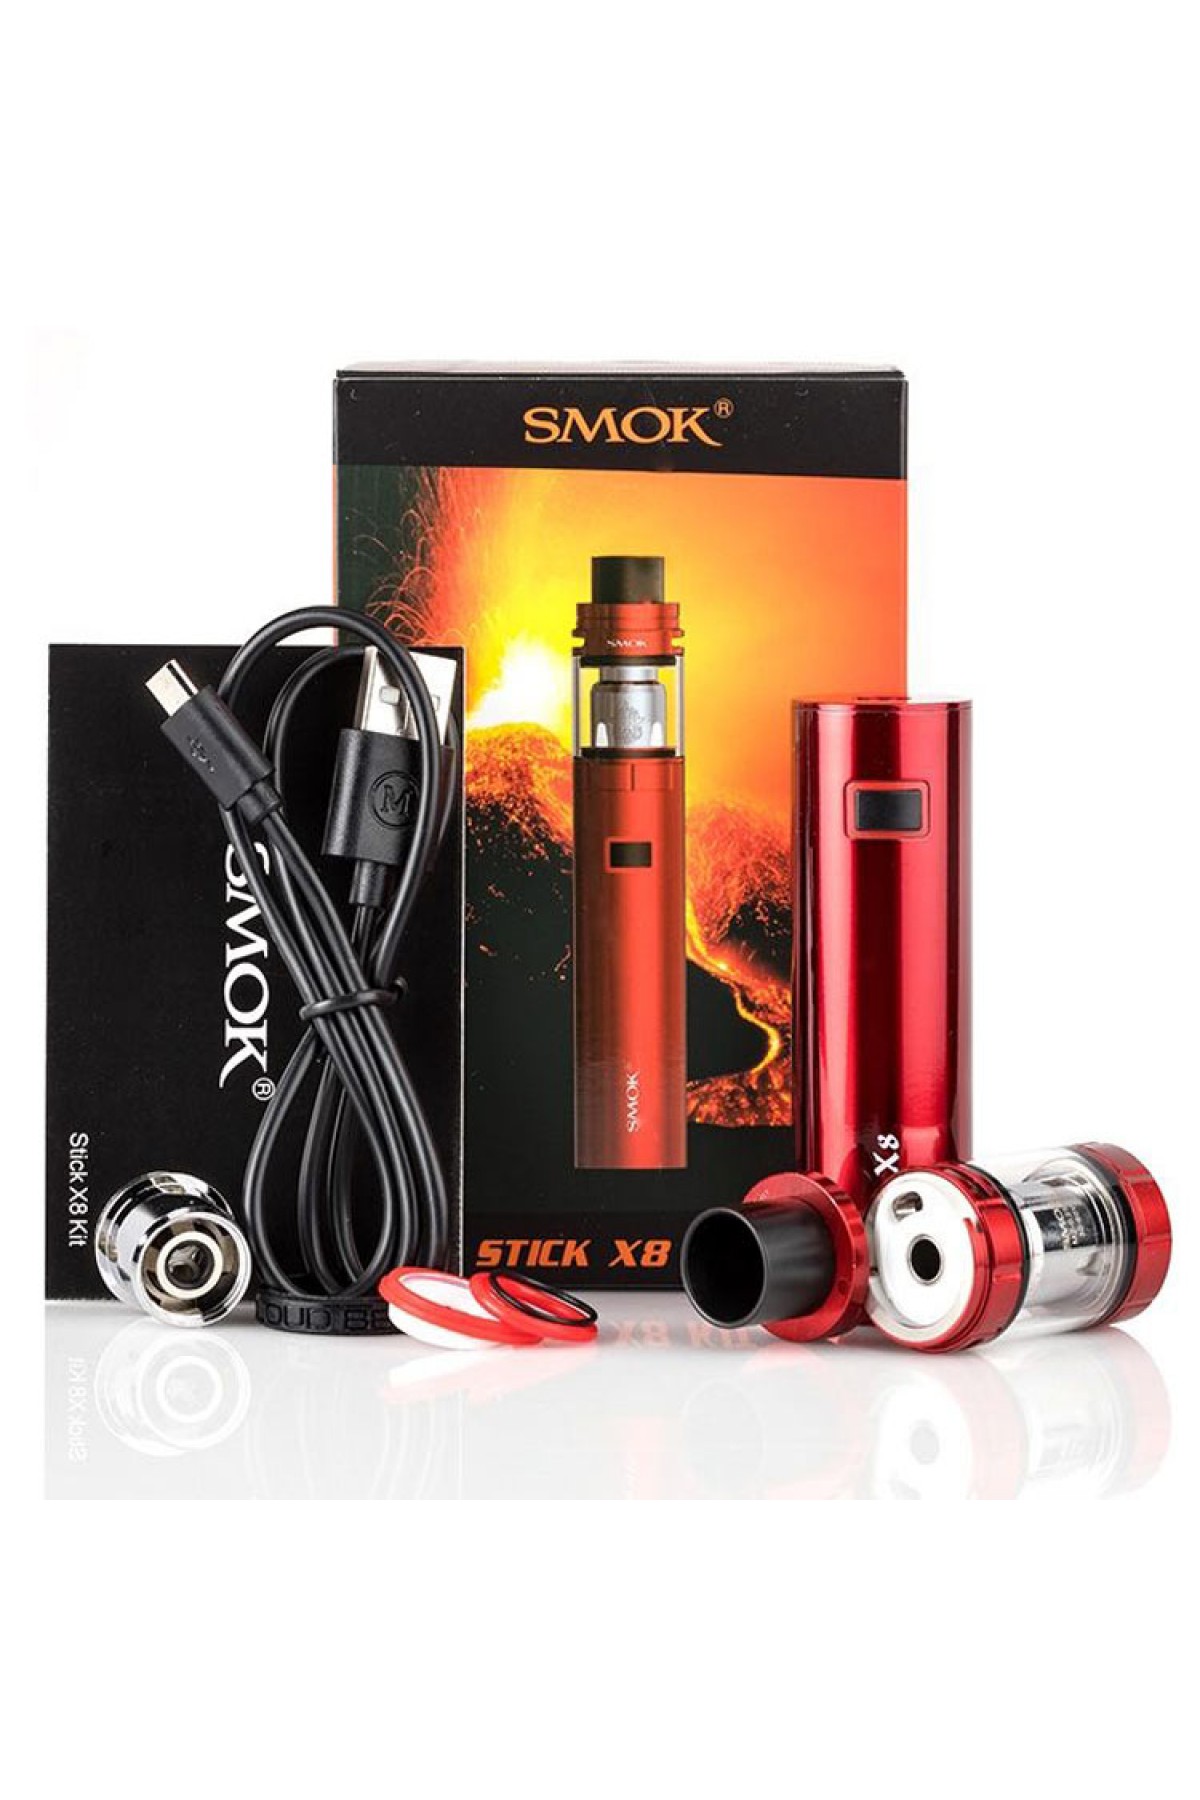 SMOK STICK X8 STARTER KIT 3000mAh